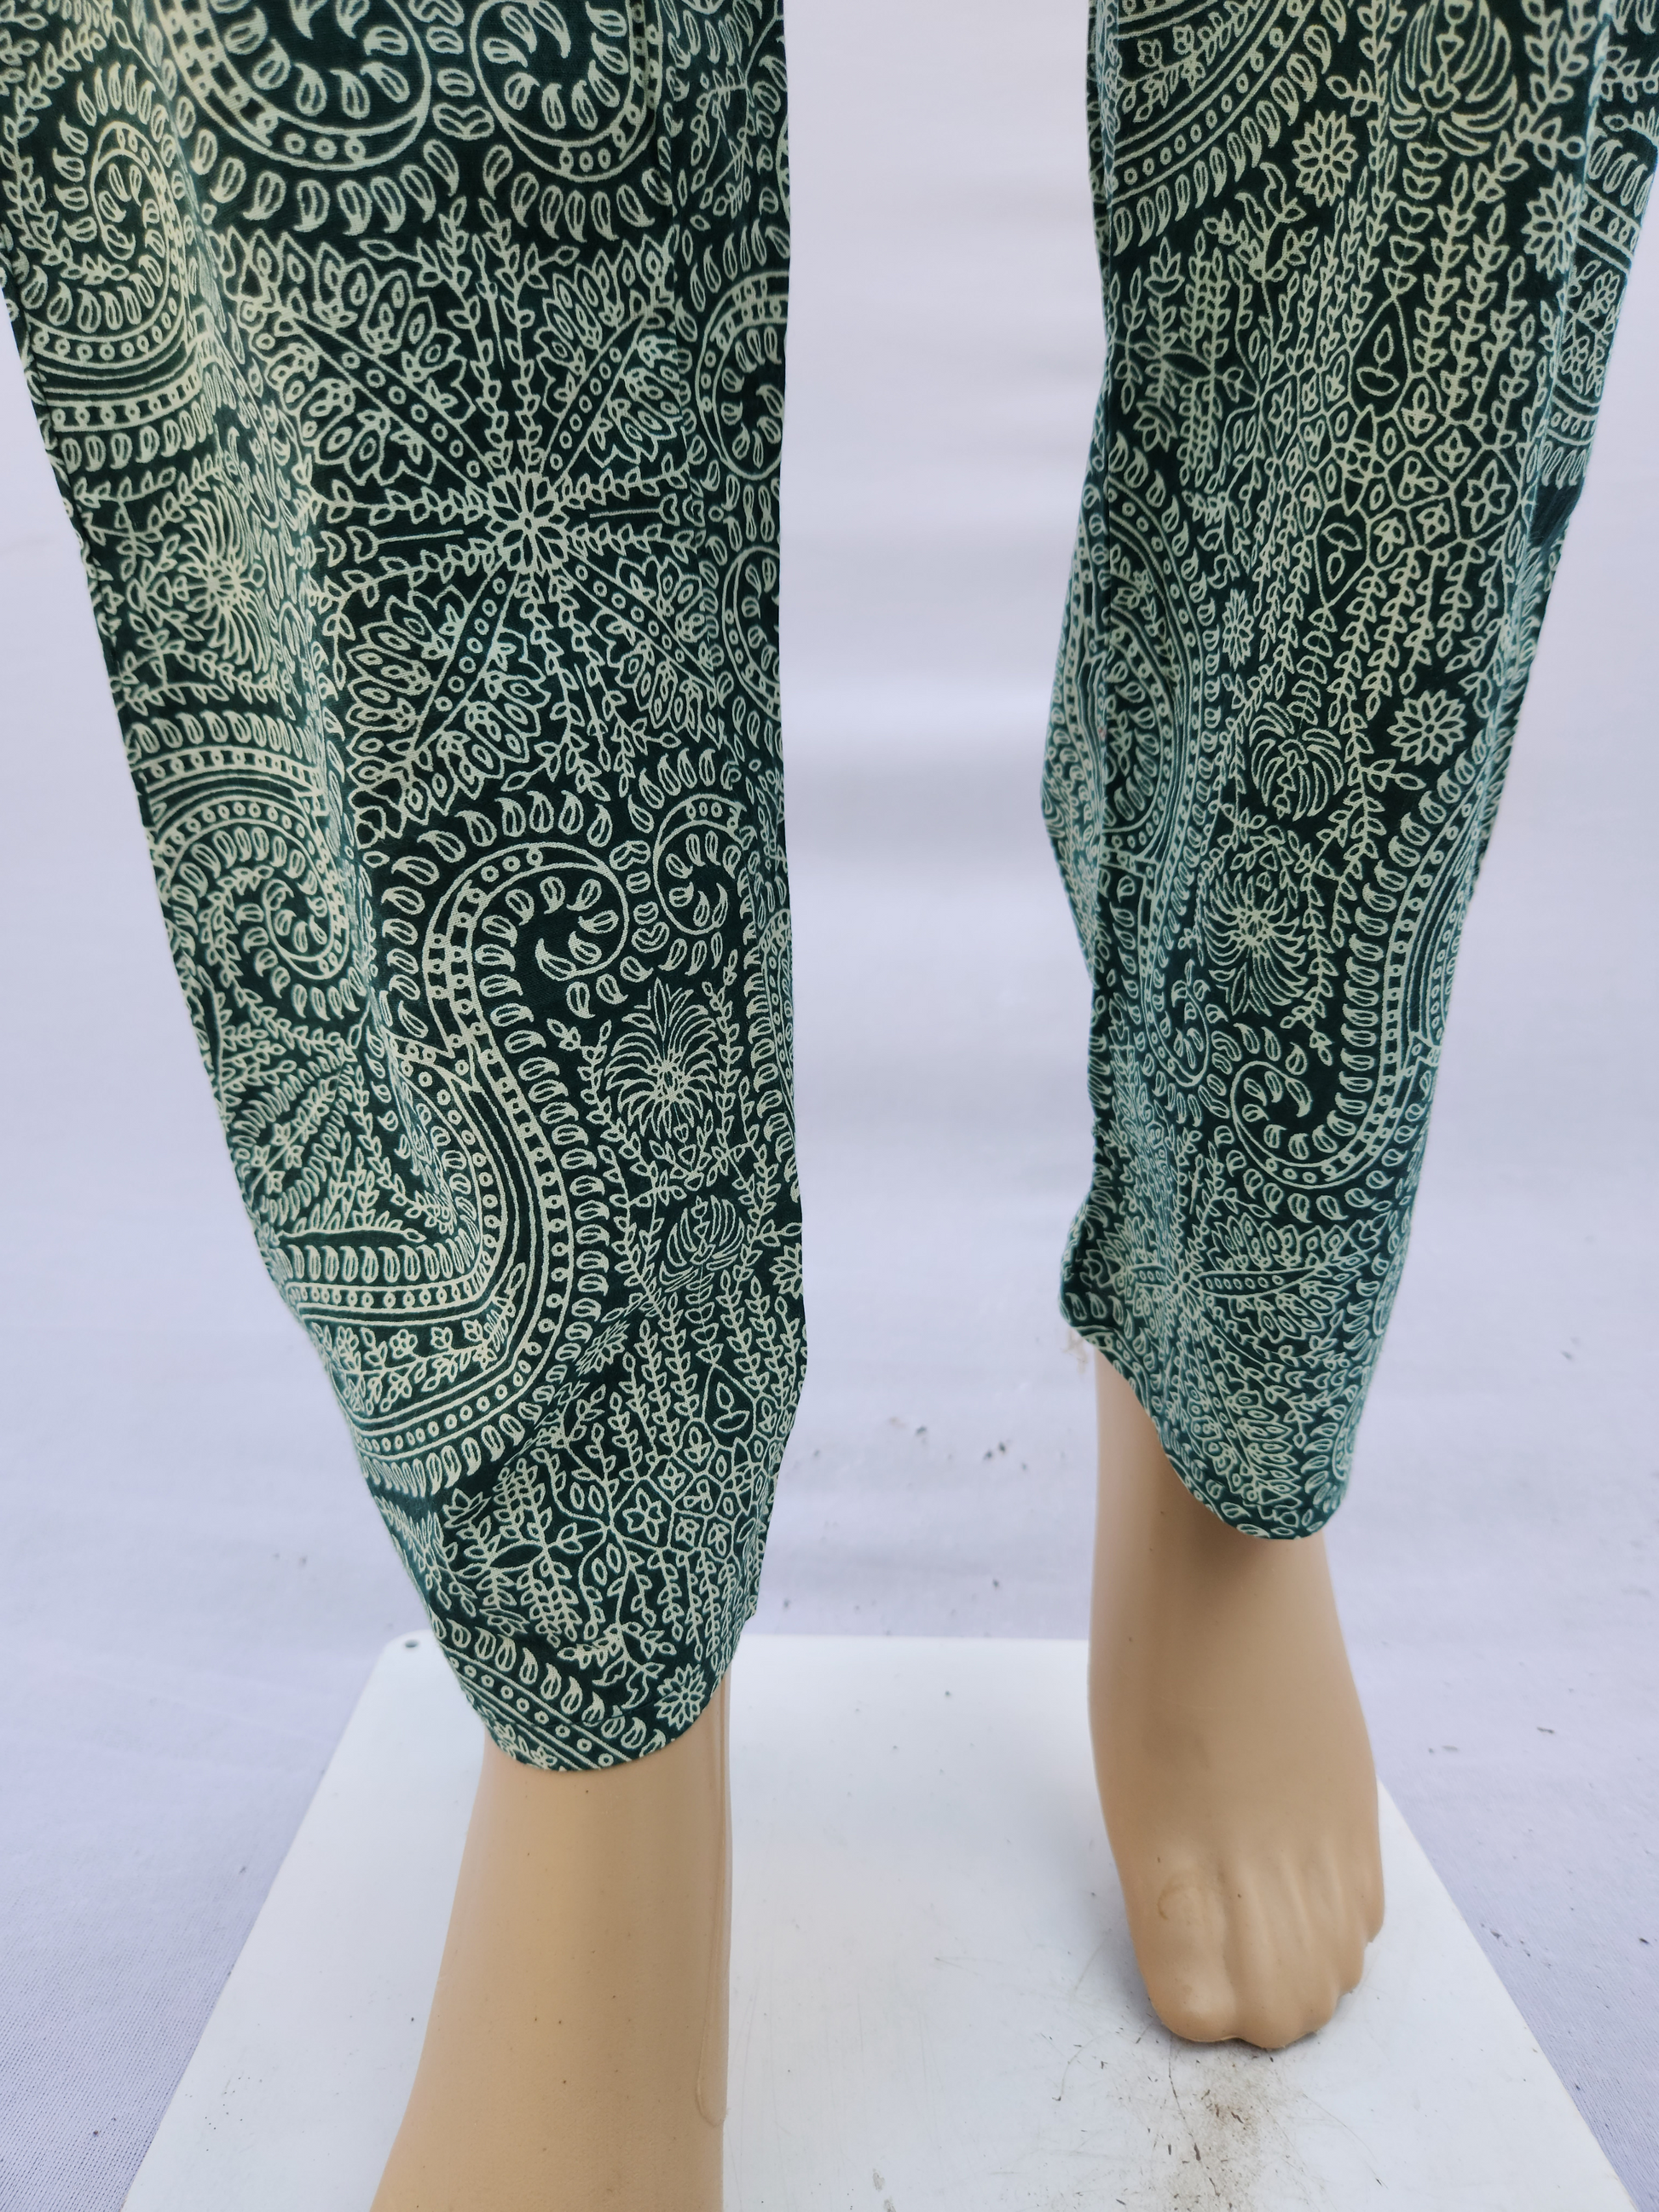 Green Pure Cotton Hand Block Printed Co-Ord Kurthis Set for women  |  Stylish Kurthis & Kurtis Sets for Women  | Threyas 